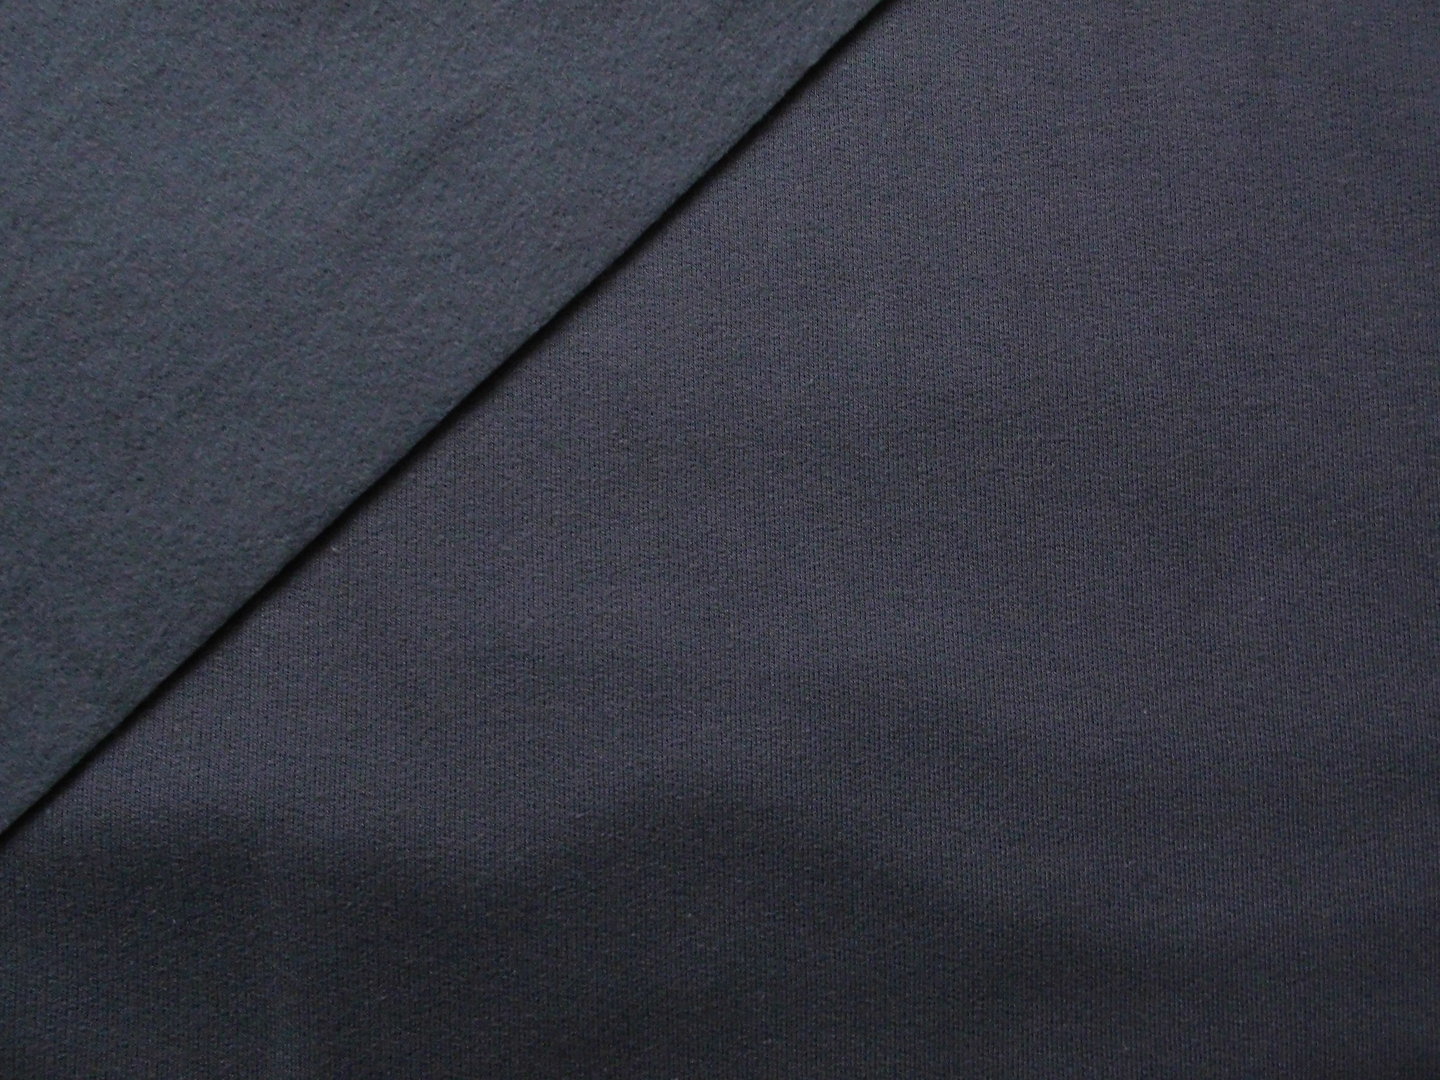 Sweatshirt-Stoff dunkelgrau